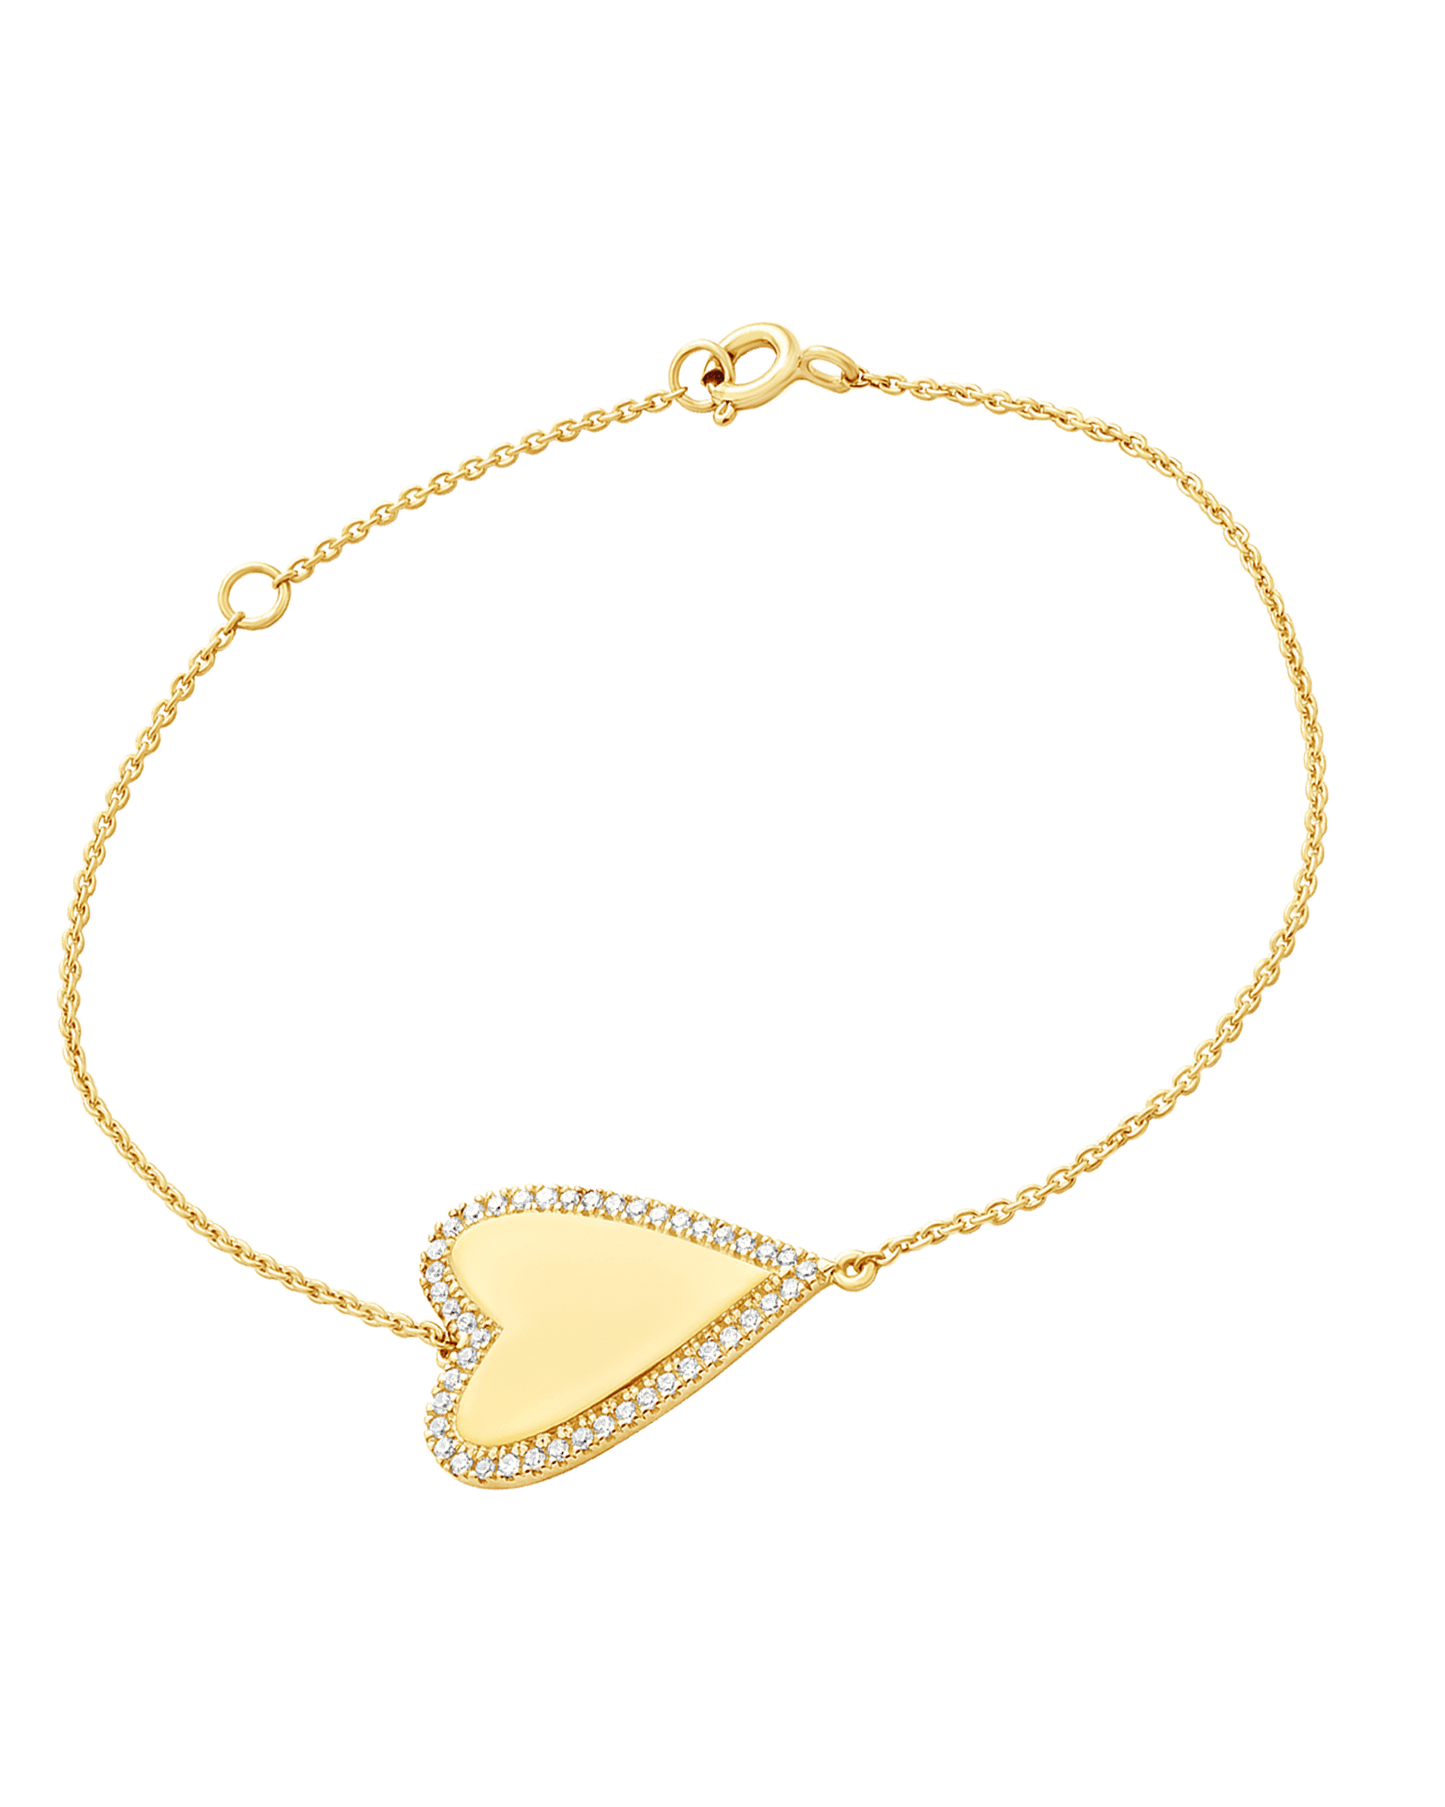 Outlined Diamond Heart Bracelet - 18K Gold Vermeil Bracelets magal-dev 